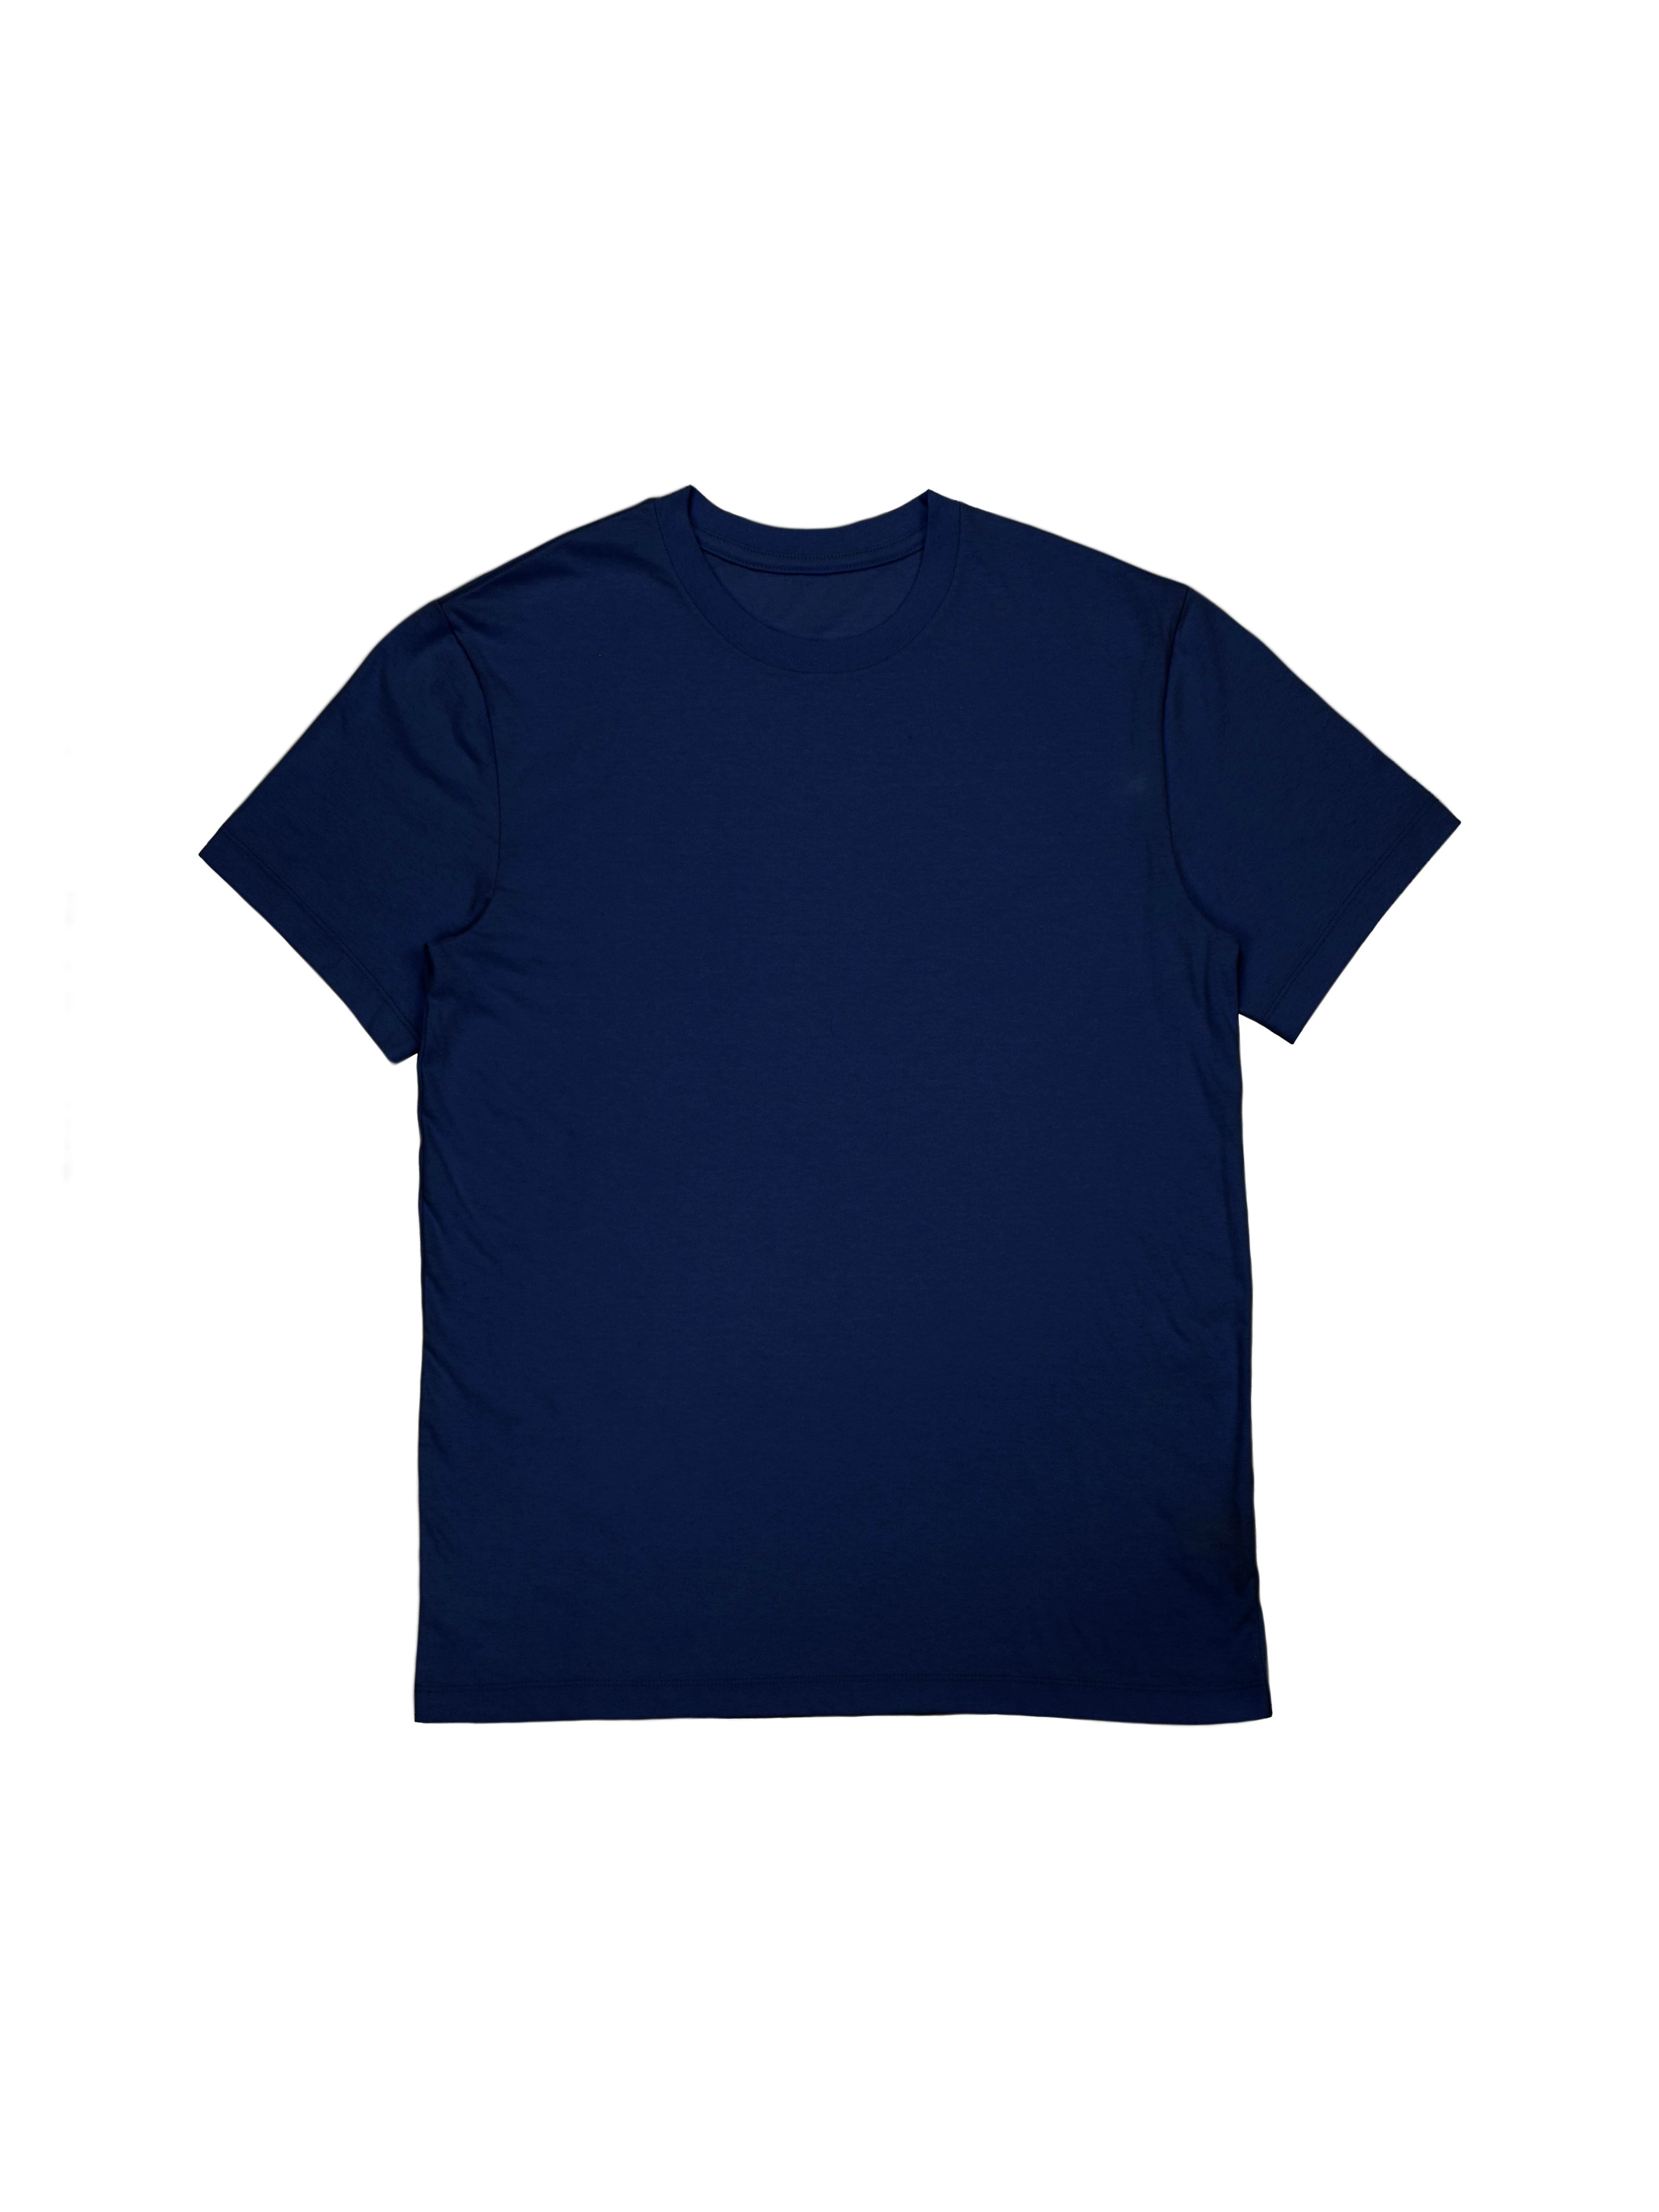 Men's Plain Navy Blue T-shirt Regular fit - THE JUNTO.IN